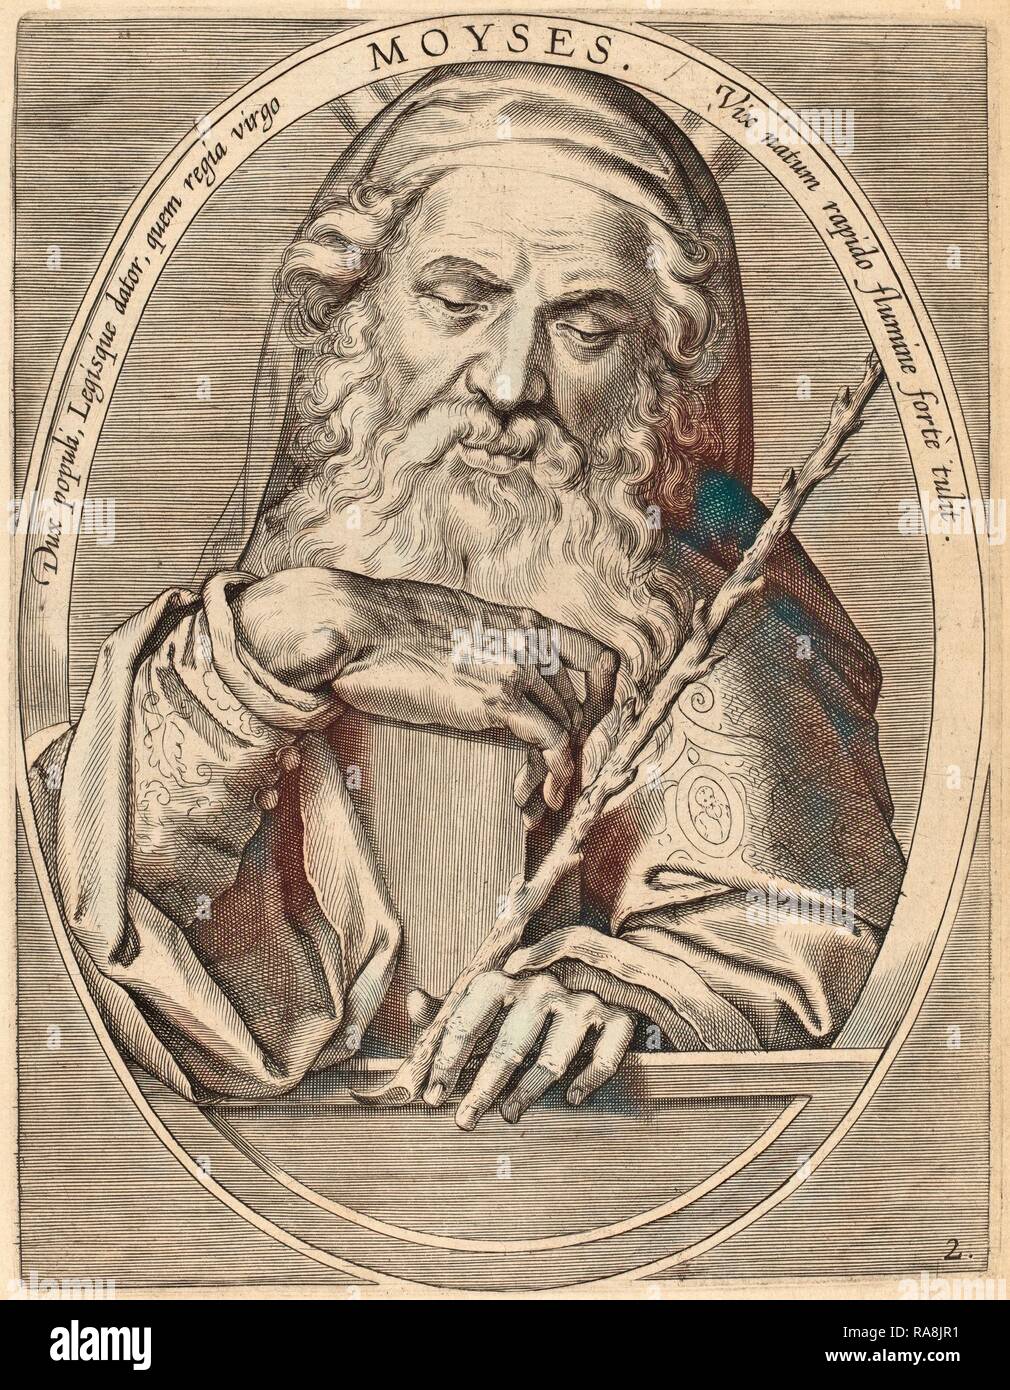 Theodor Galle after Jan van der Straet (Flemish, c. 1571 - 1633), Moses, published 1613, engraving on laid paper reimagined Stock Photo